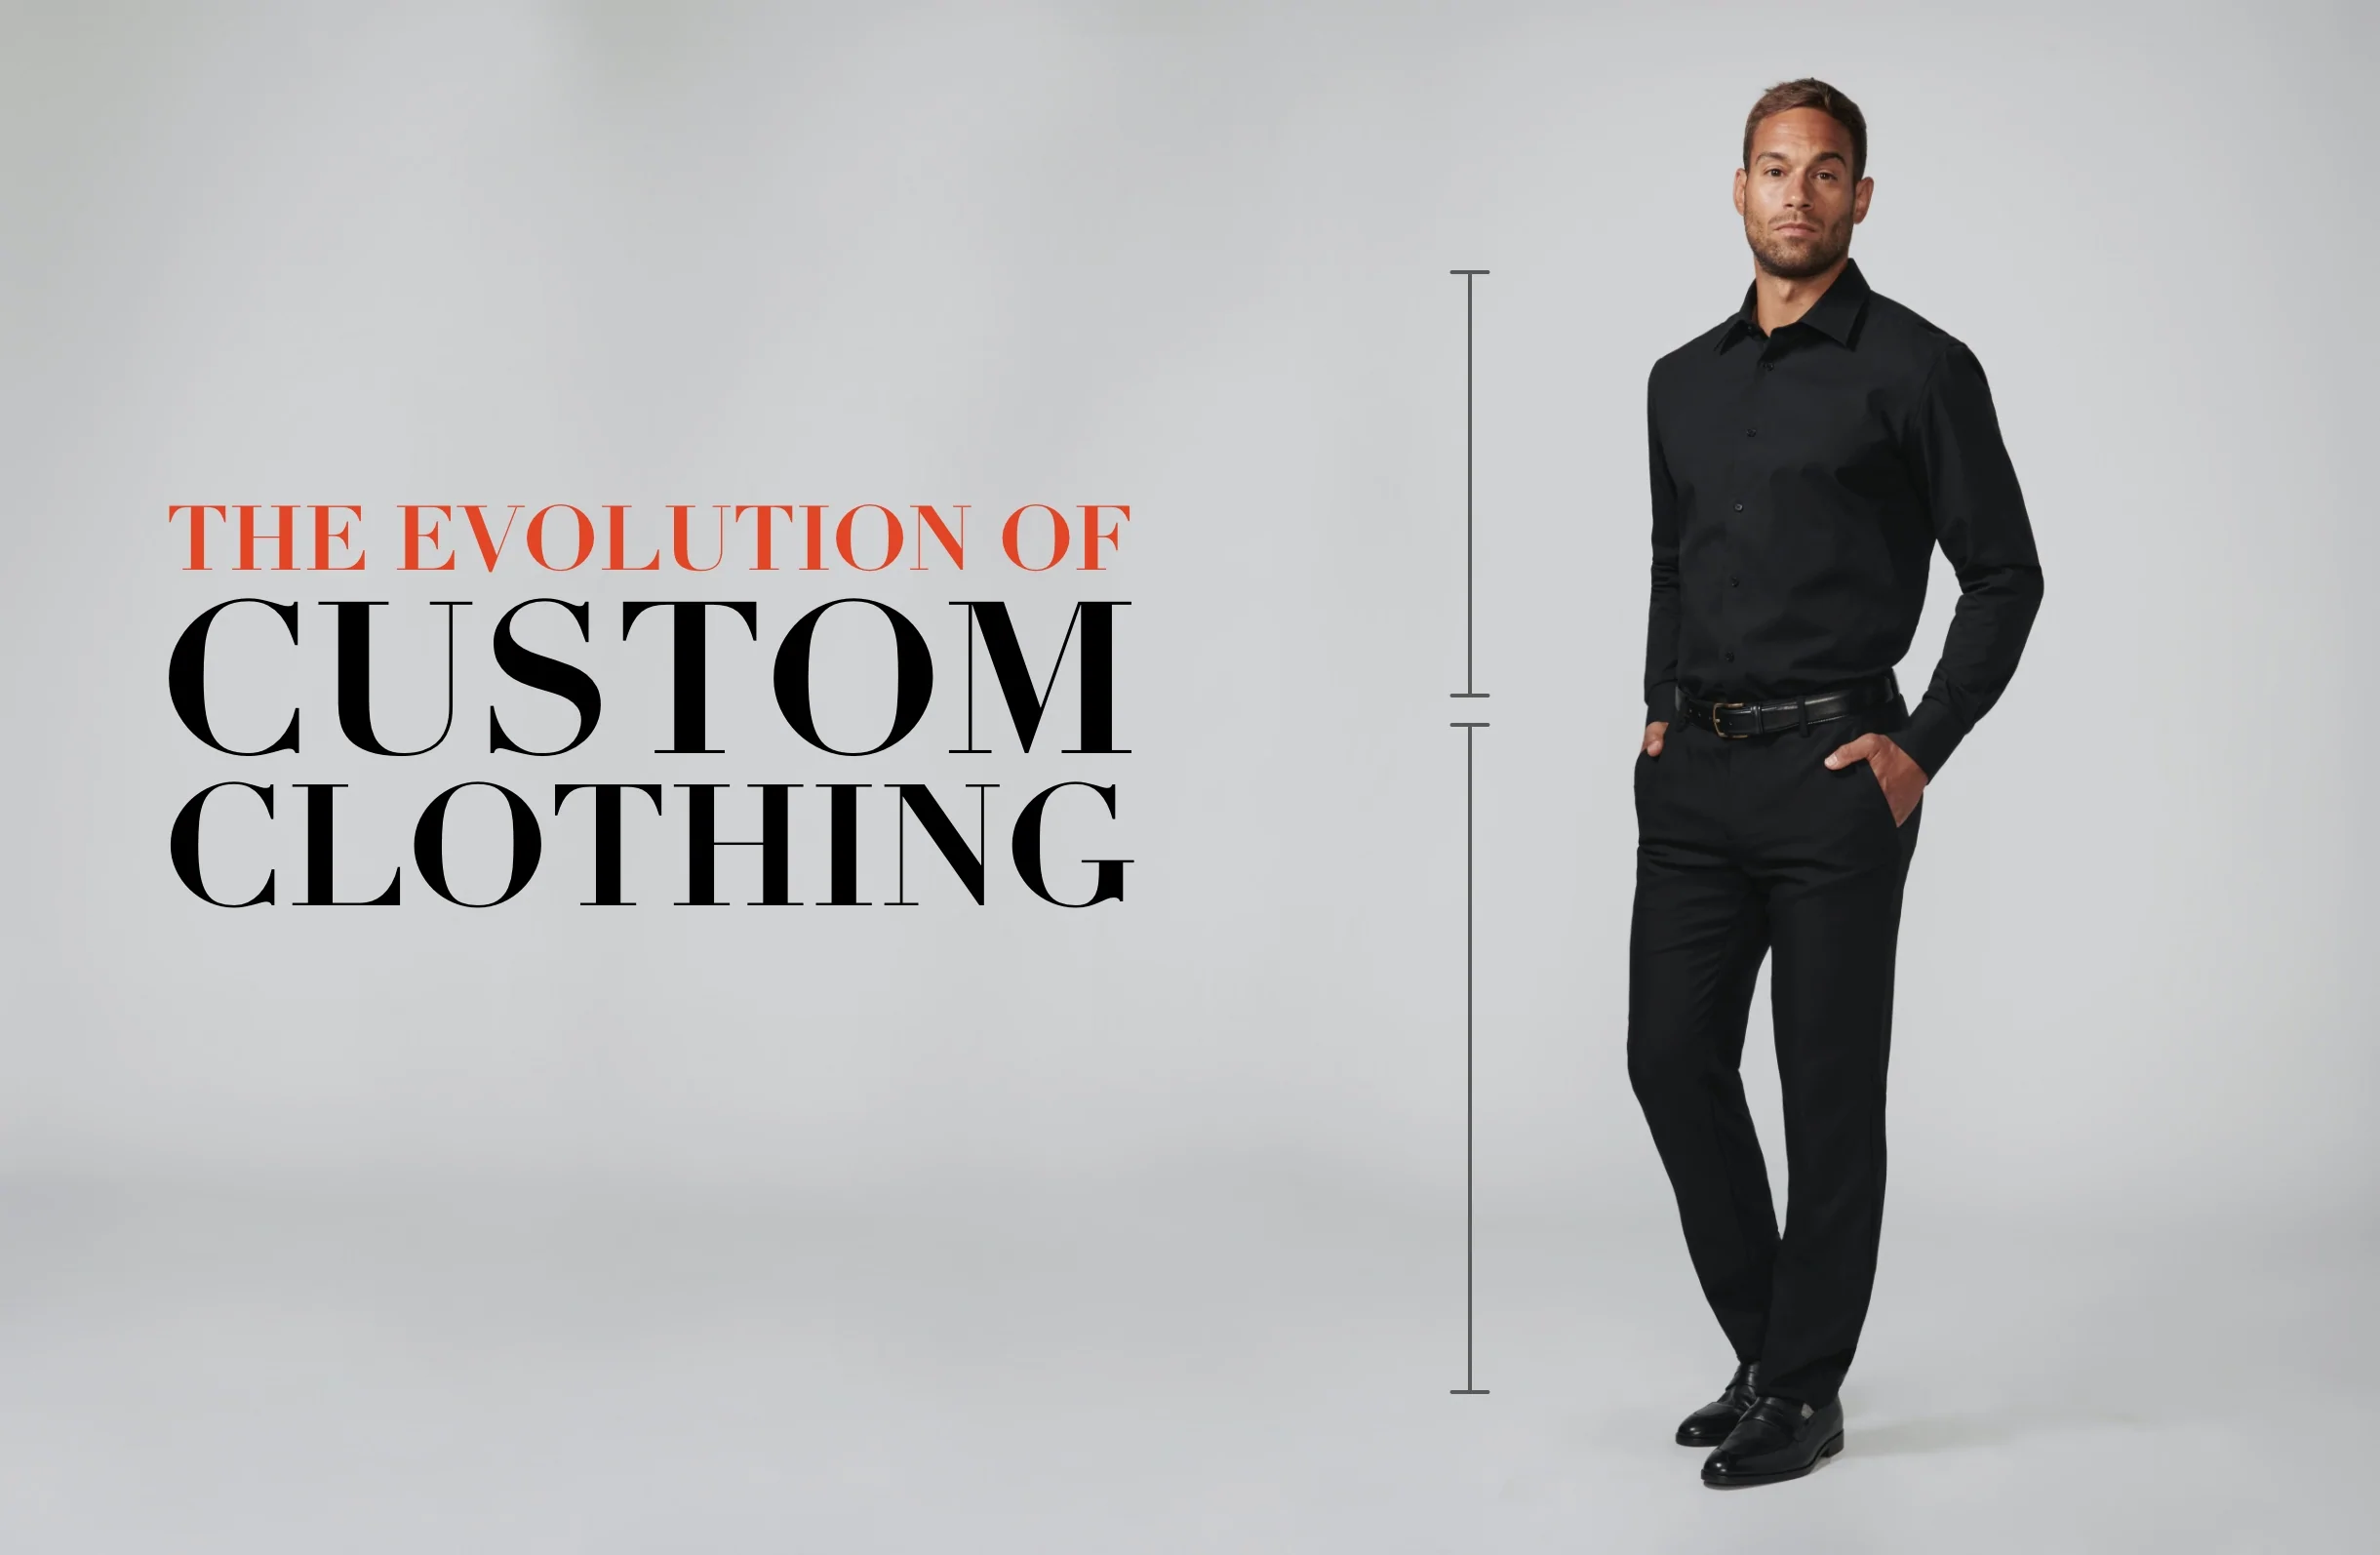 The Evolution of Custom Clothing